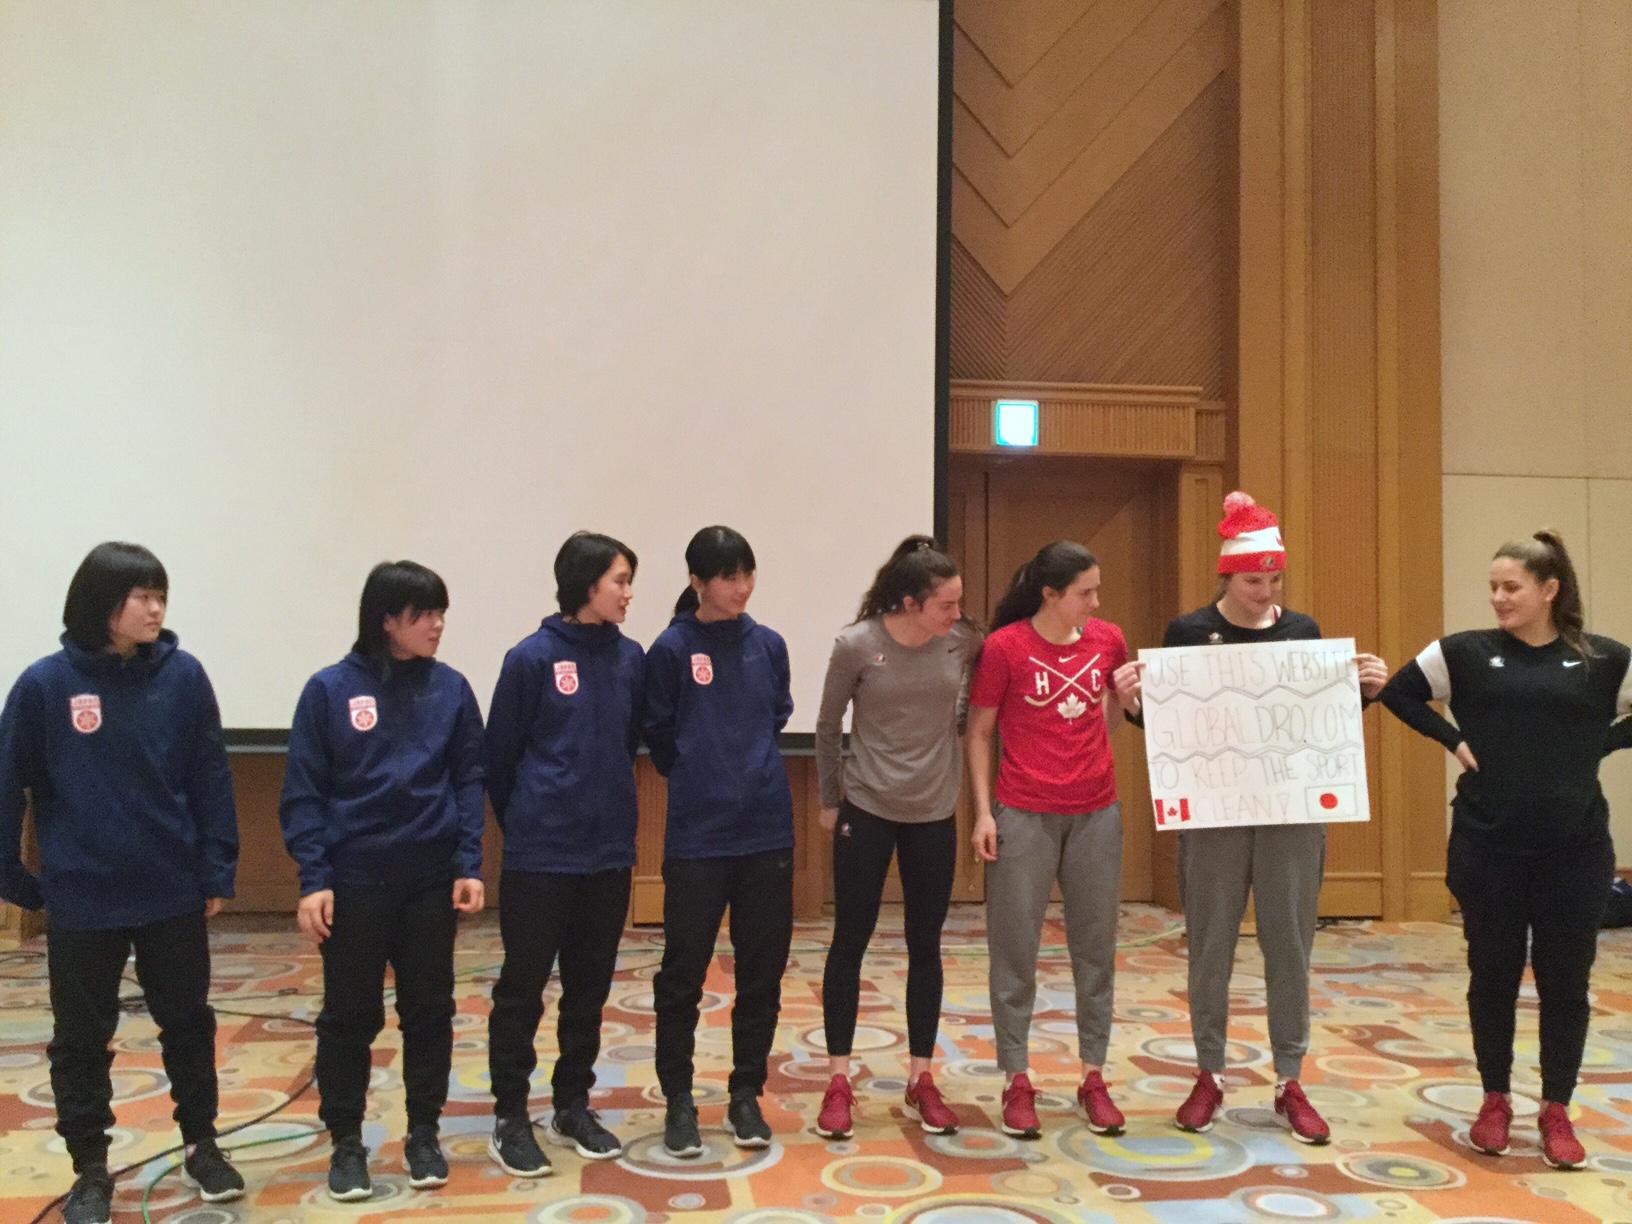 19iihf女子u 18アイスホッケー選手権において国際アイスホッケー連盟 Iihf とパートナーシッププログラムを実施 日本アンチ ドーピング機構 Japan Anti Doping Agency Jada